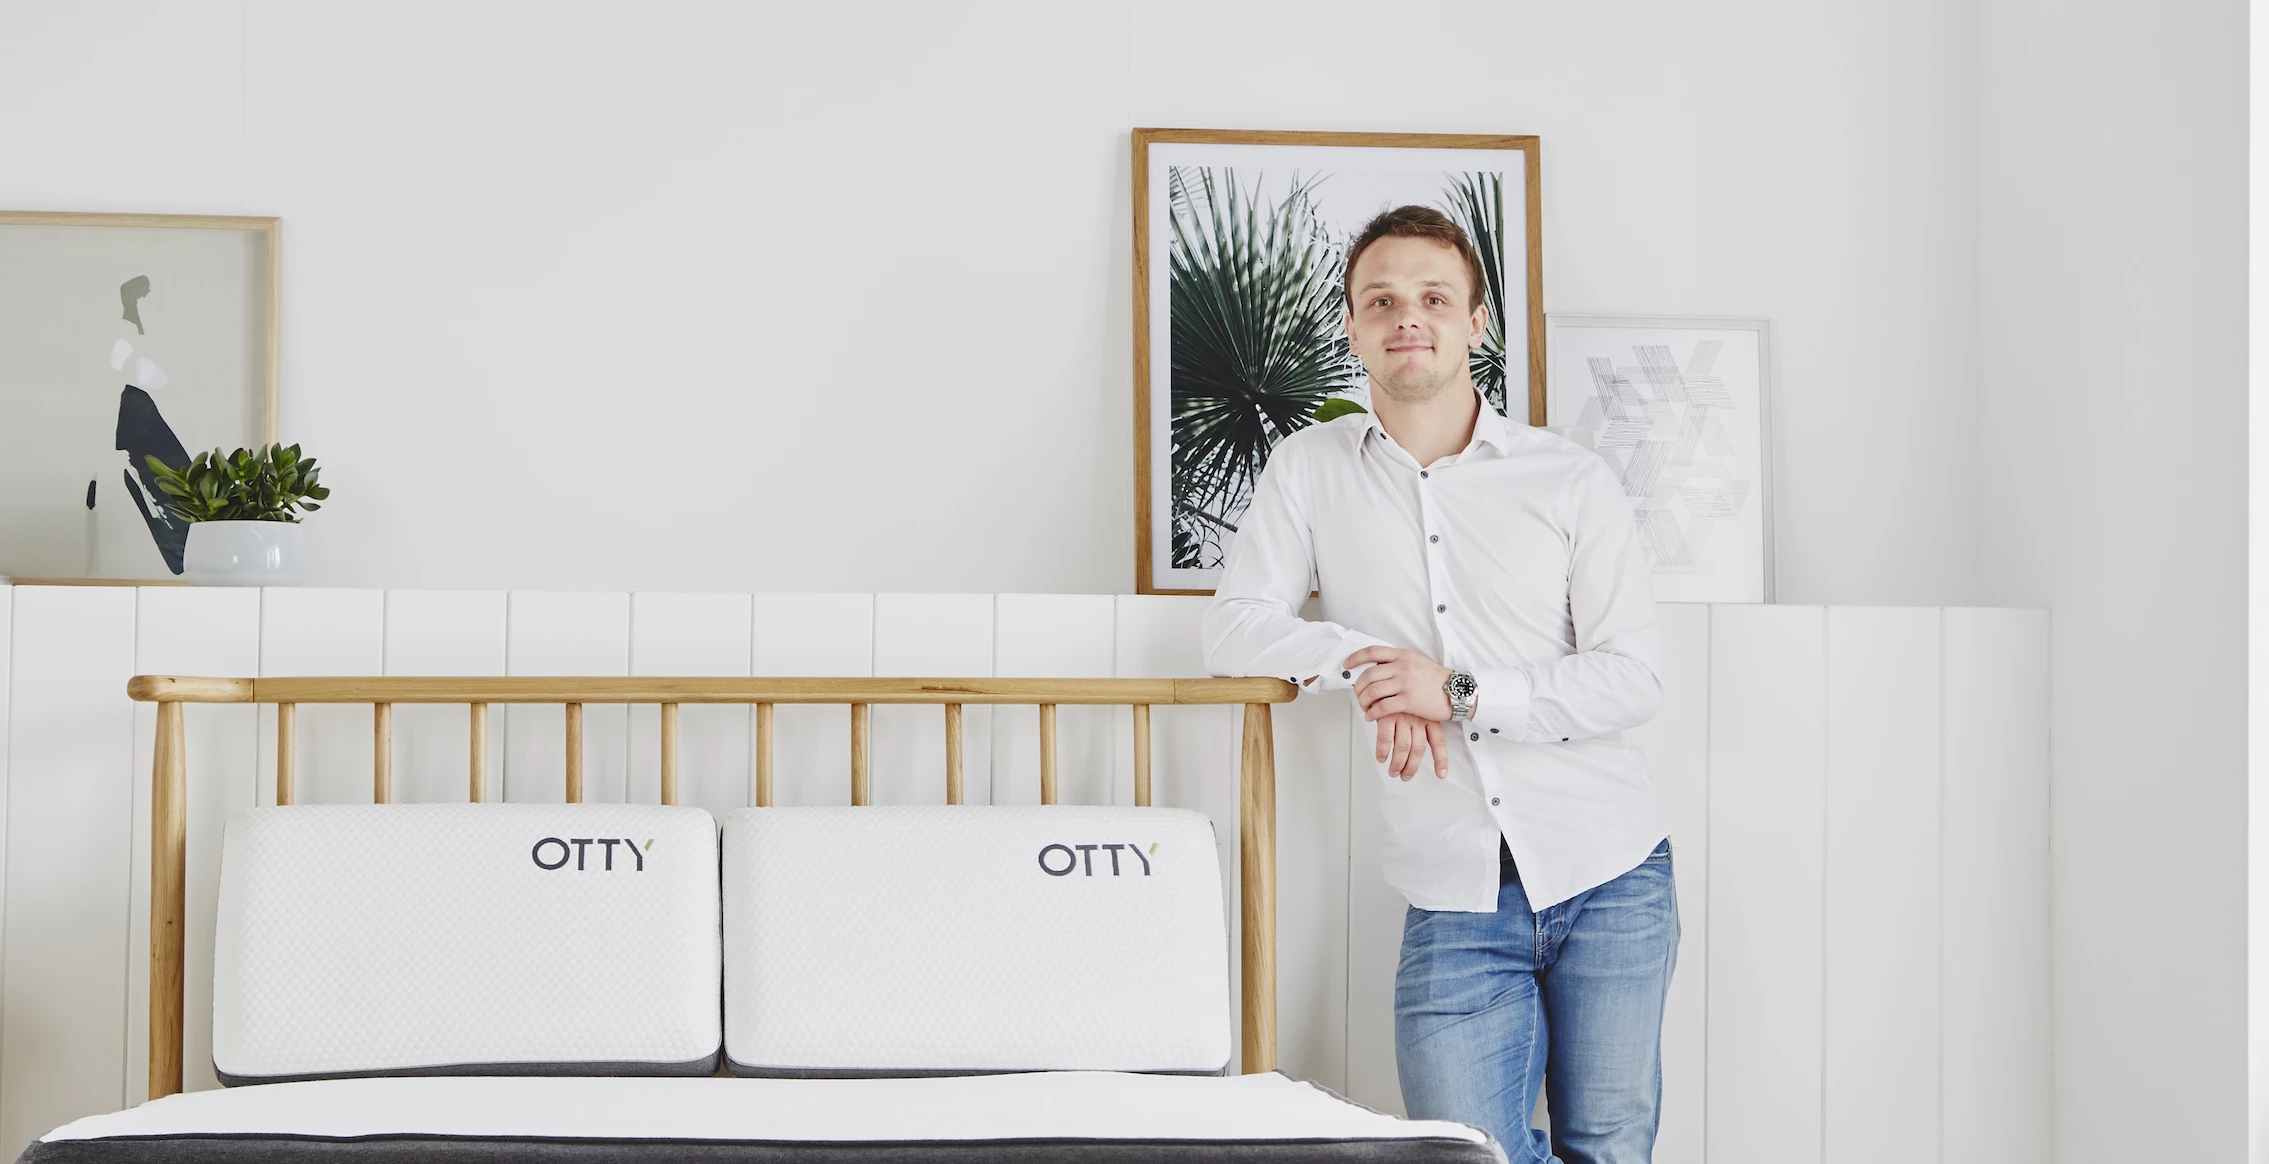 OTTY Sleep founder Michal Szlas